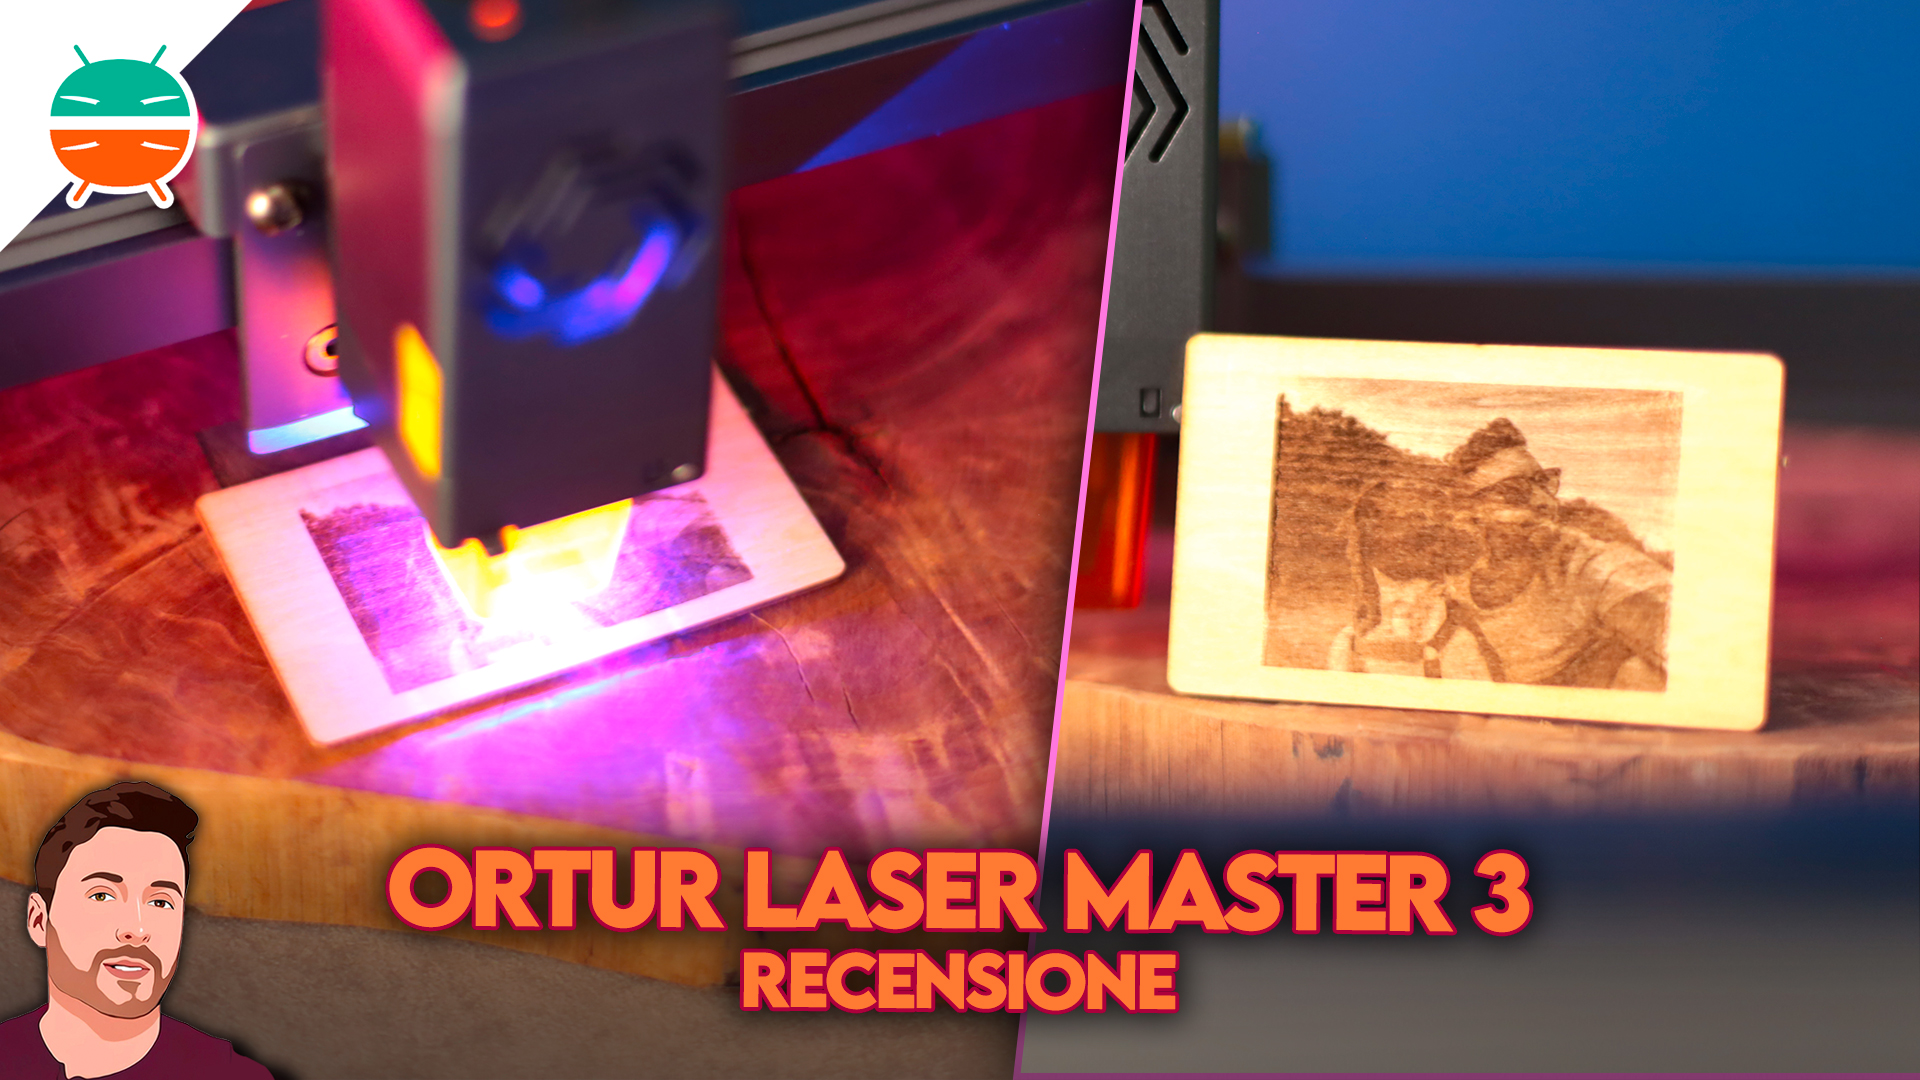 Ortur Laser Master 3 detailed review